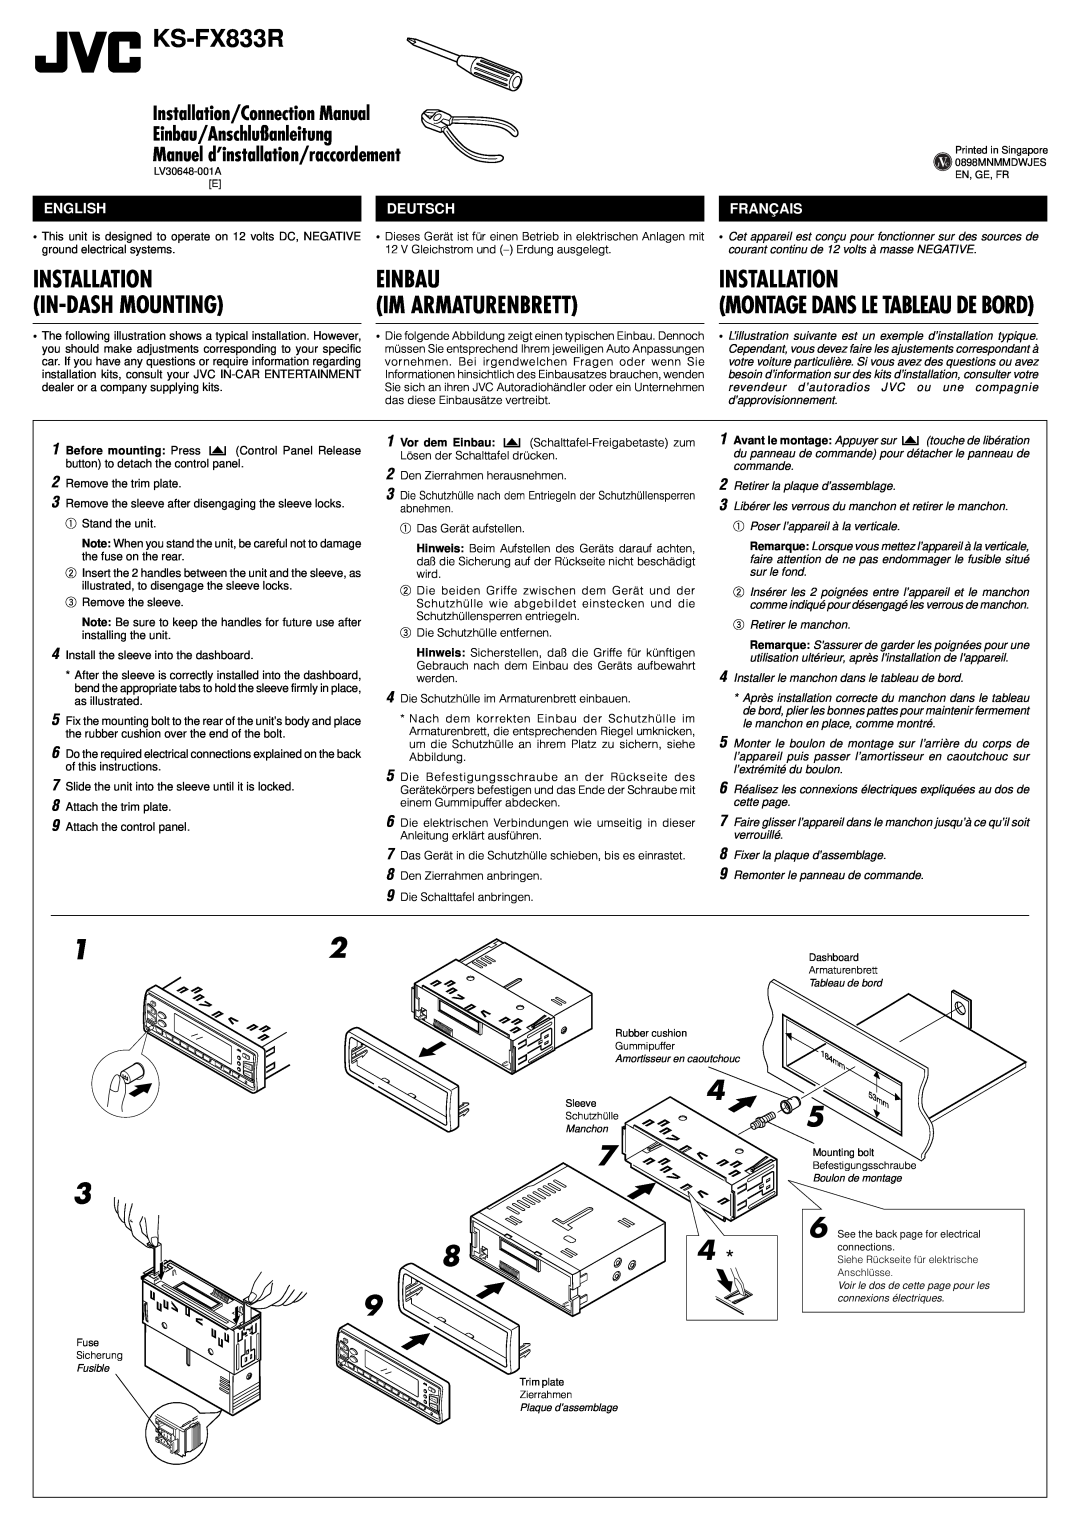 JVC manual Einbau Im Armaturenbrett, English, Deutsch, KS-FX833R, Installation/Connection Manual, 184mm, 53mm 